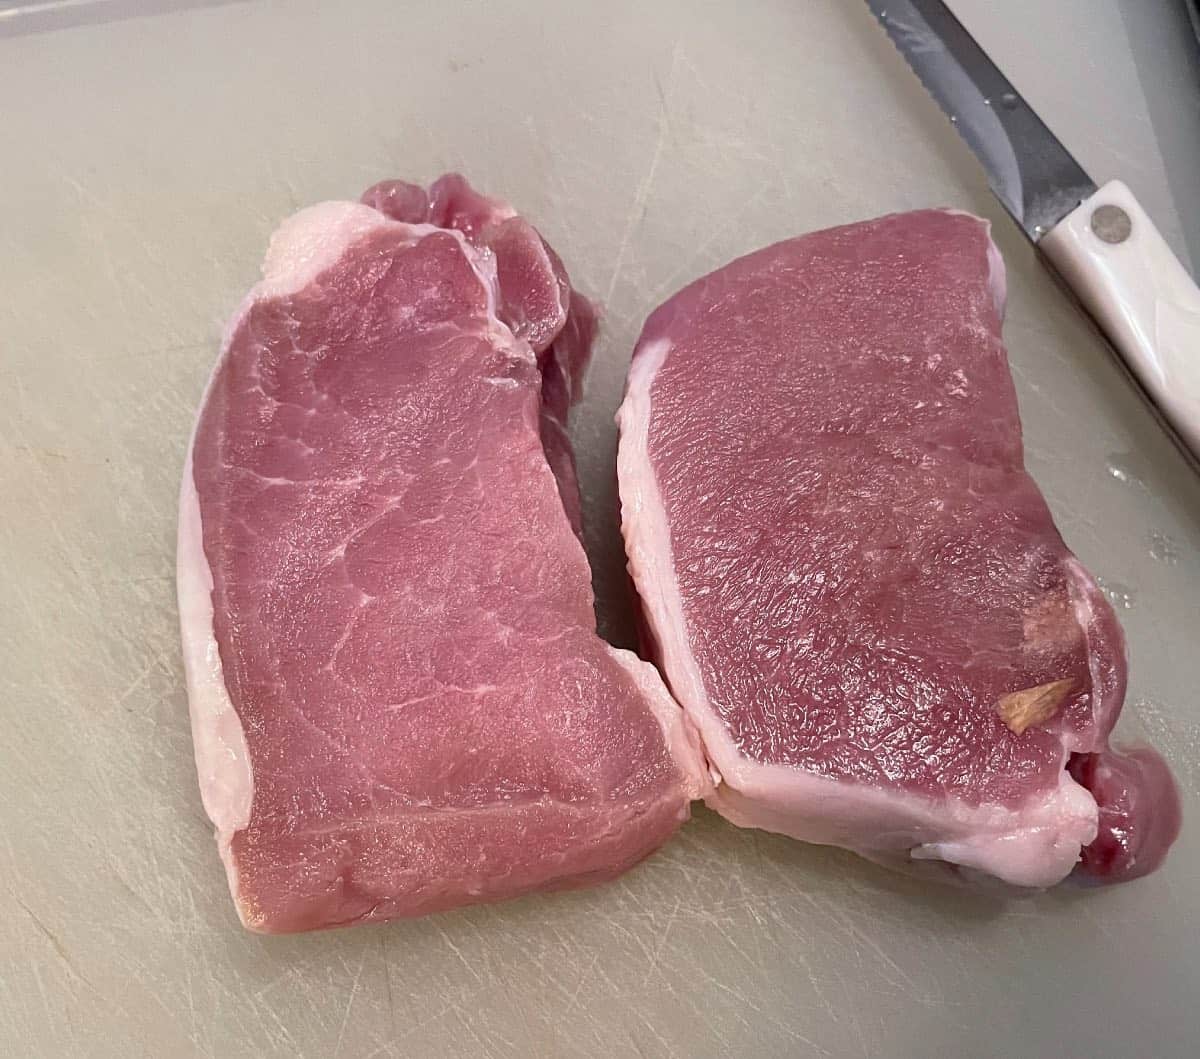 Two pork chops on a white cutting board.